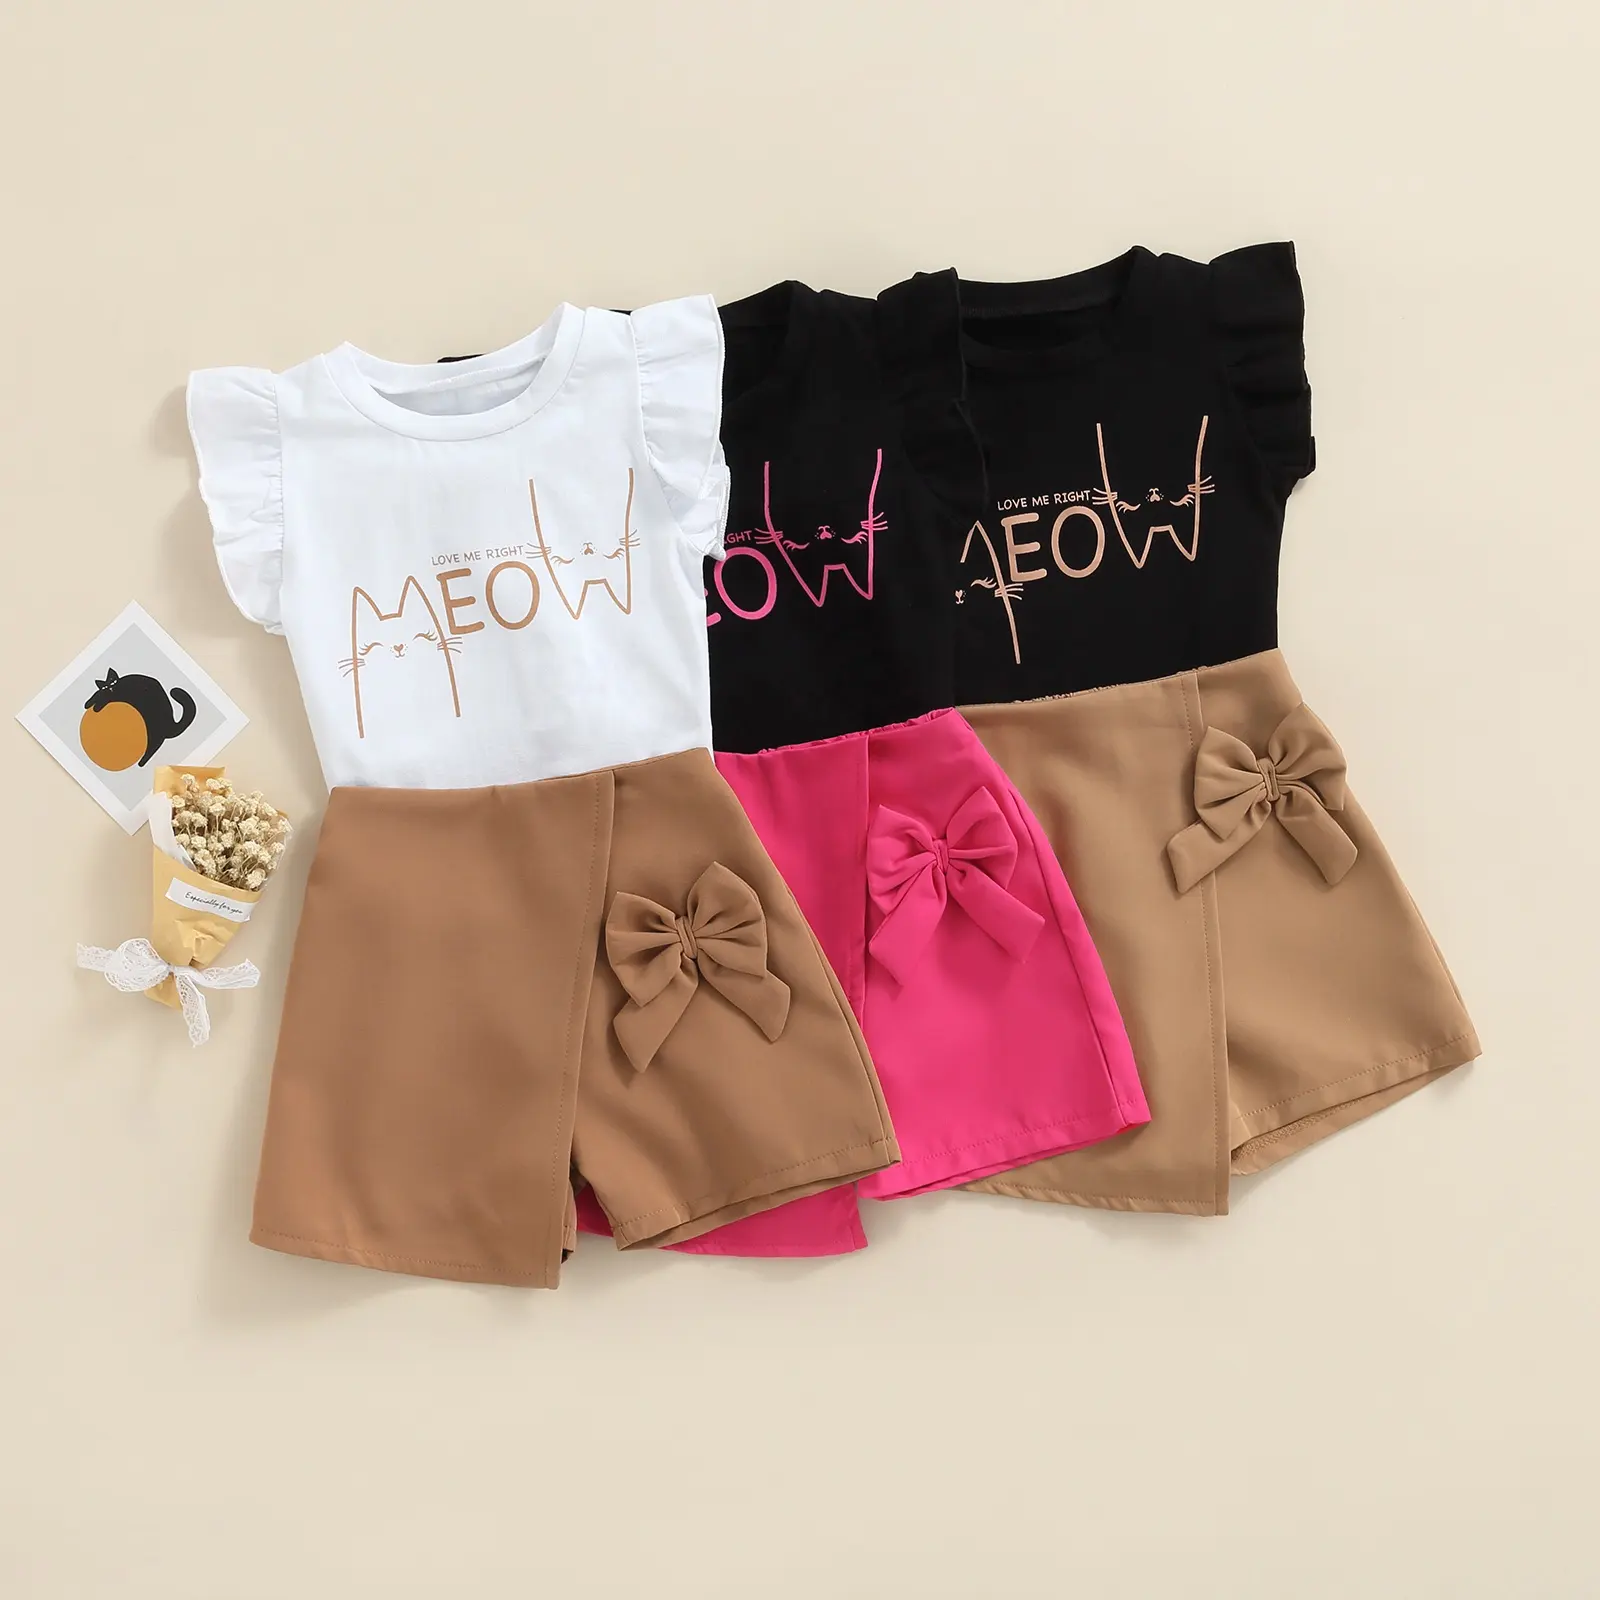 Kleidungs set für Kid Girl 2-7 Jahre alt Cartoon gedruckt Kurzarm T-Shirt Kurzer Rock Sommer anzug Mode Kids Wear